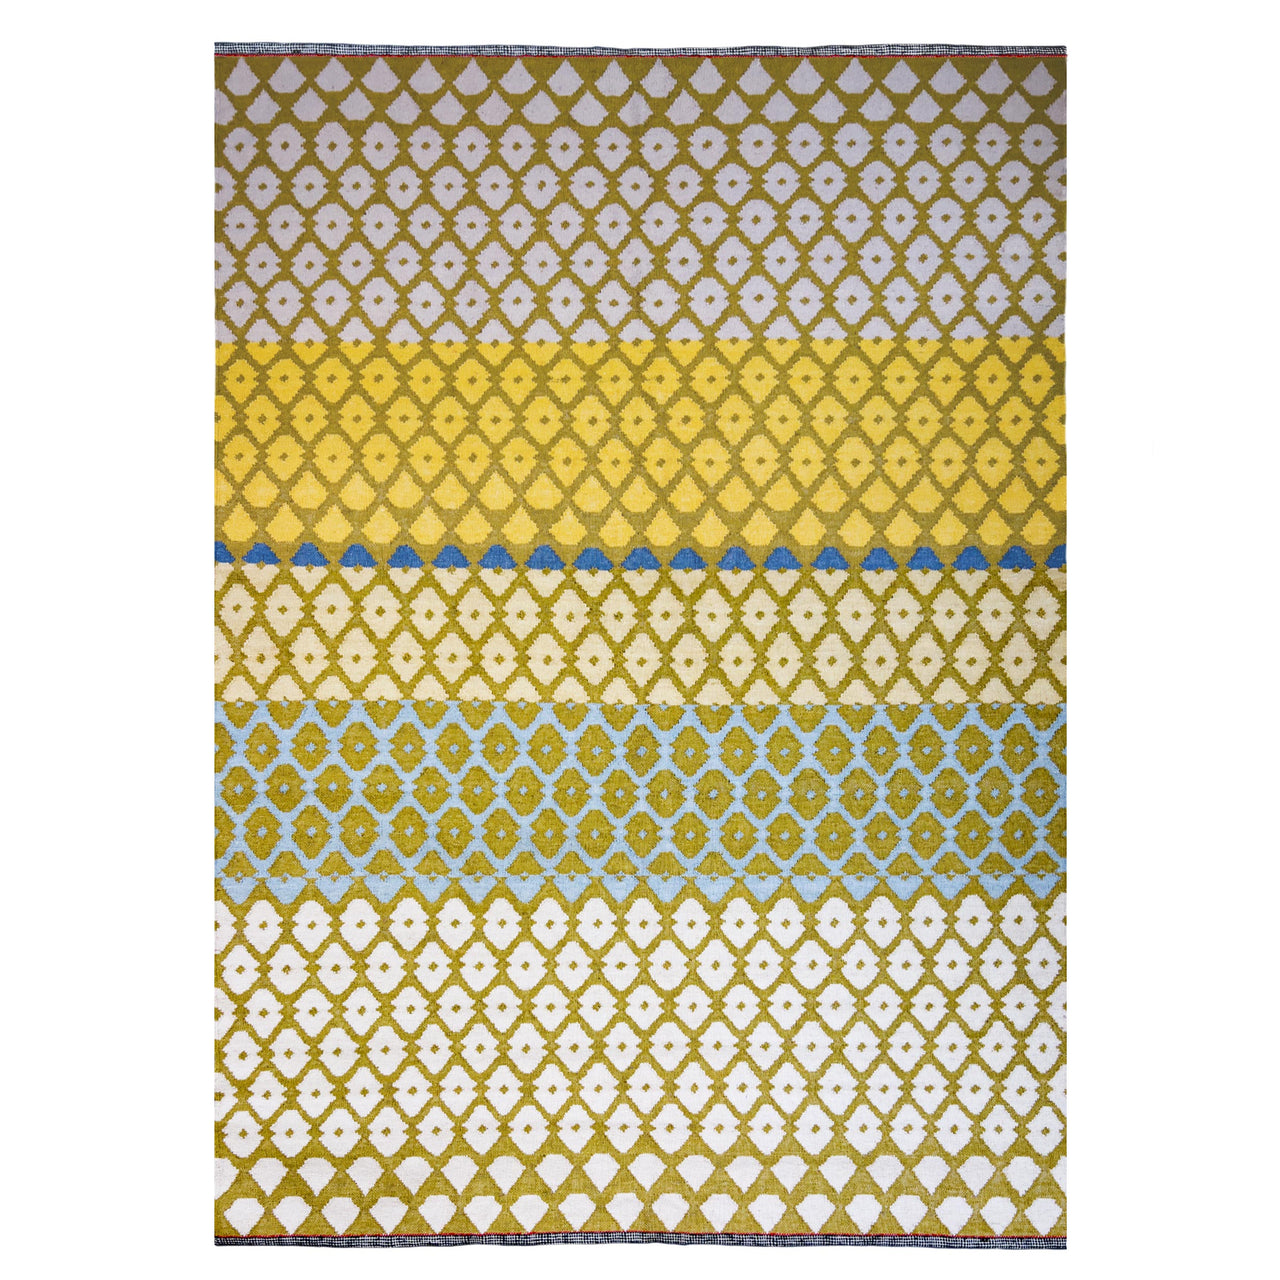 Geometric pattern, colourful rugs, designer rugs, luxury rugs, wool rugs, geometric rug, modern rug, yellow rug